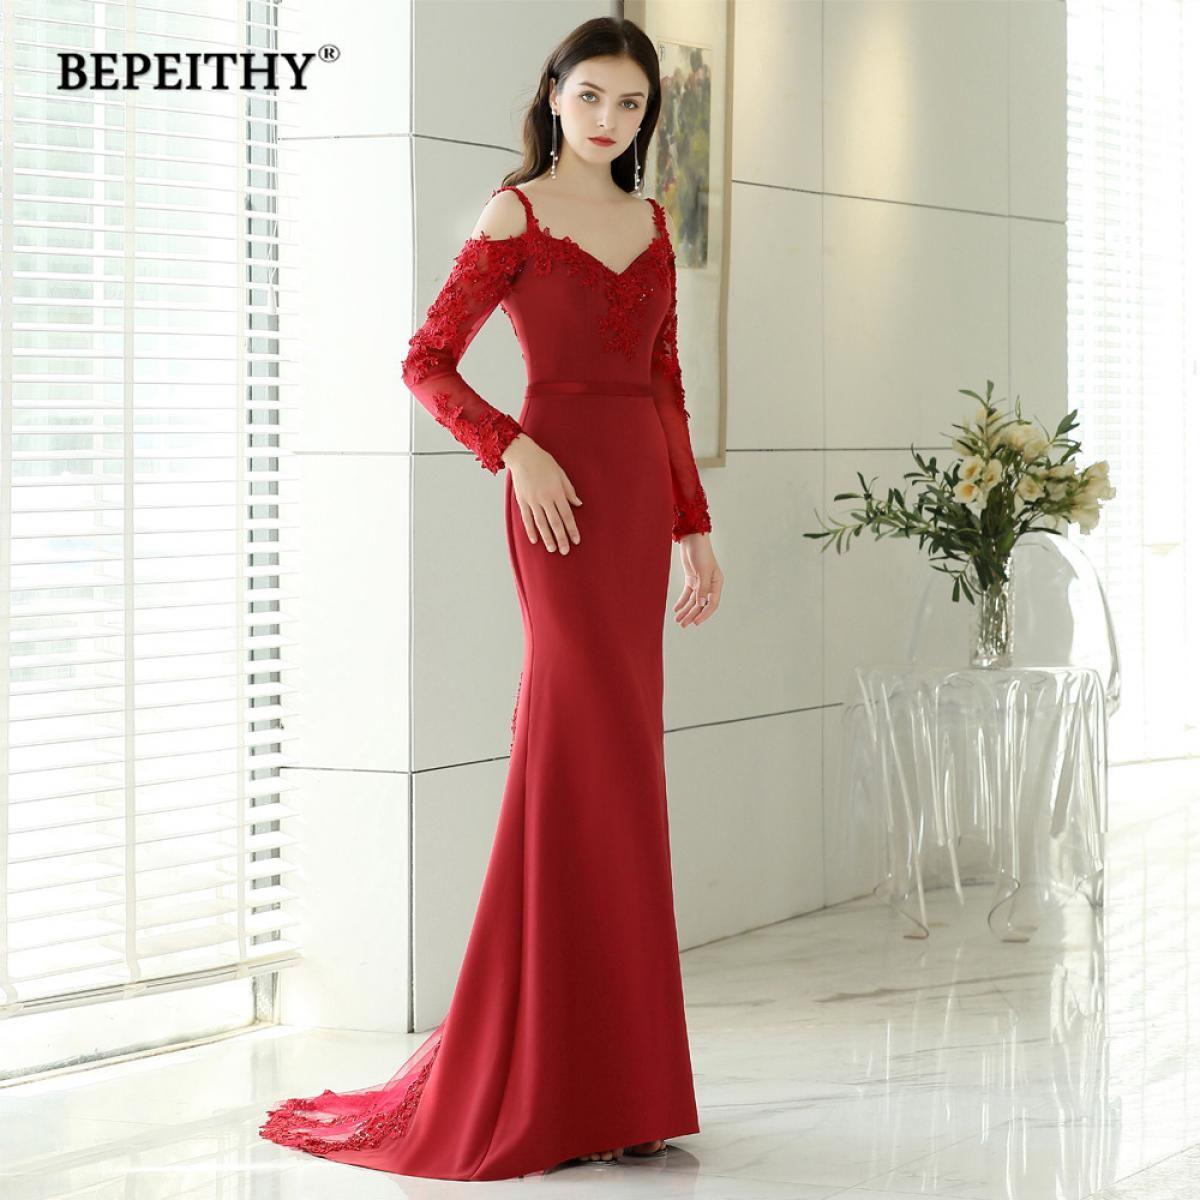 Bepeithy  New Design Mermaid Long Evening Dress Party Elegant Vestido De Festa  Backless Prom Gowns Full Sleeves Hot  Pr